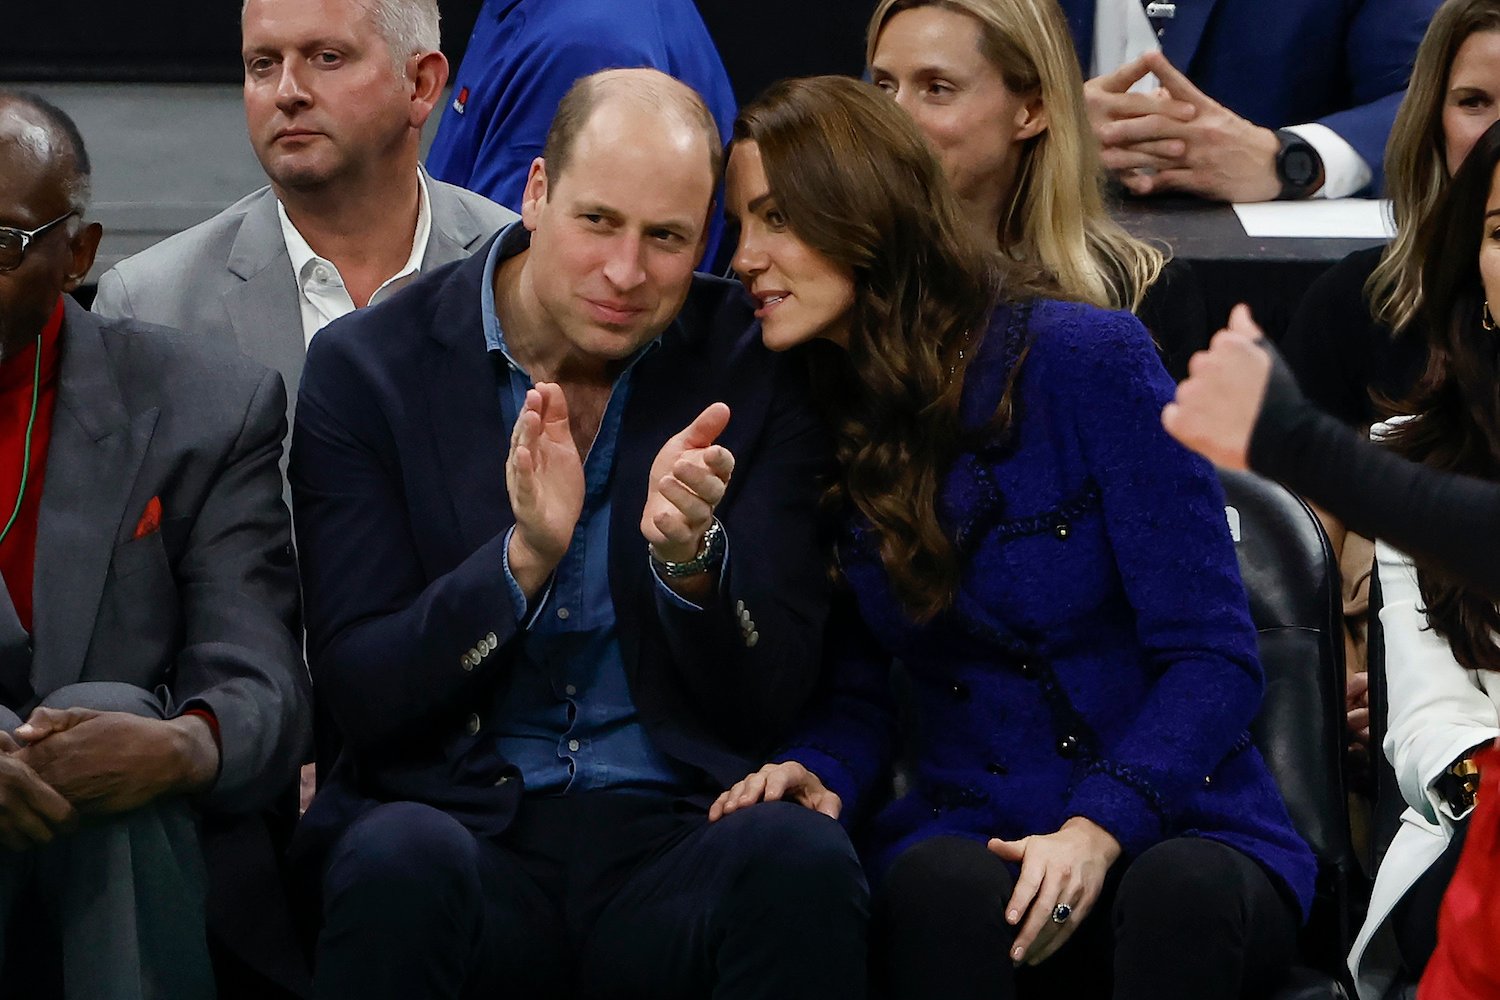 Prince William and Kate Middleton body language at a Boston Celtics NBA game in Boston